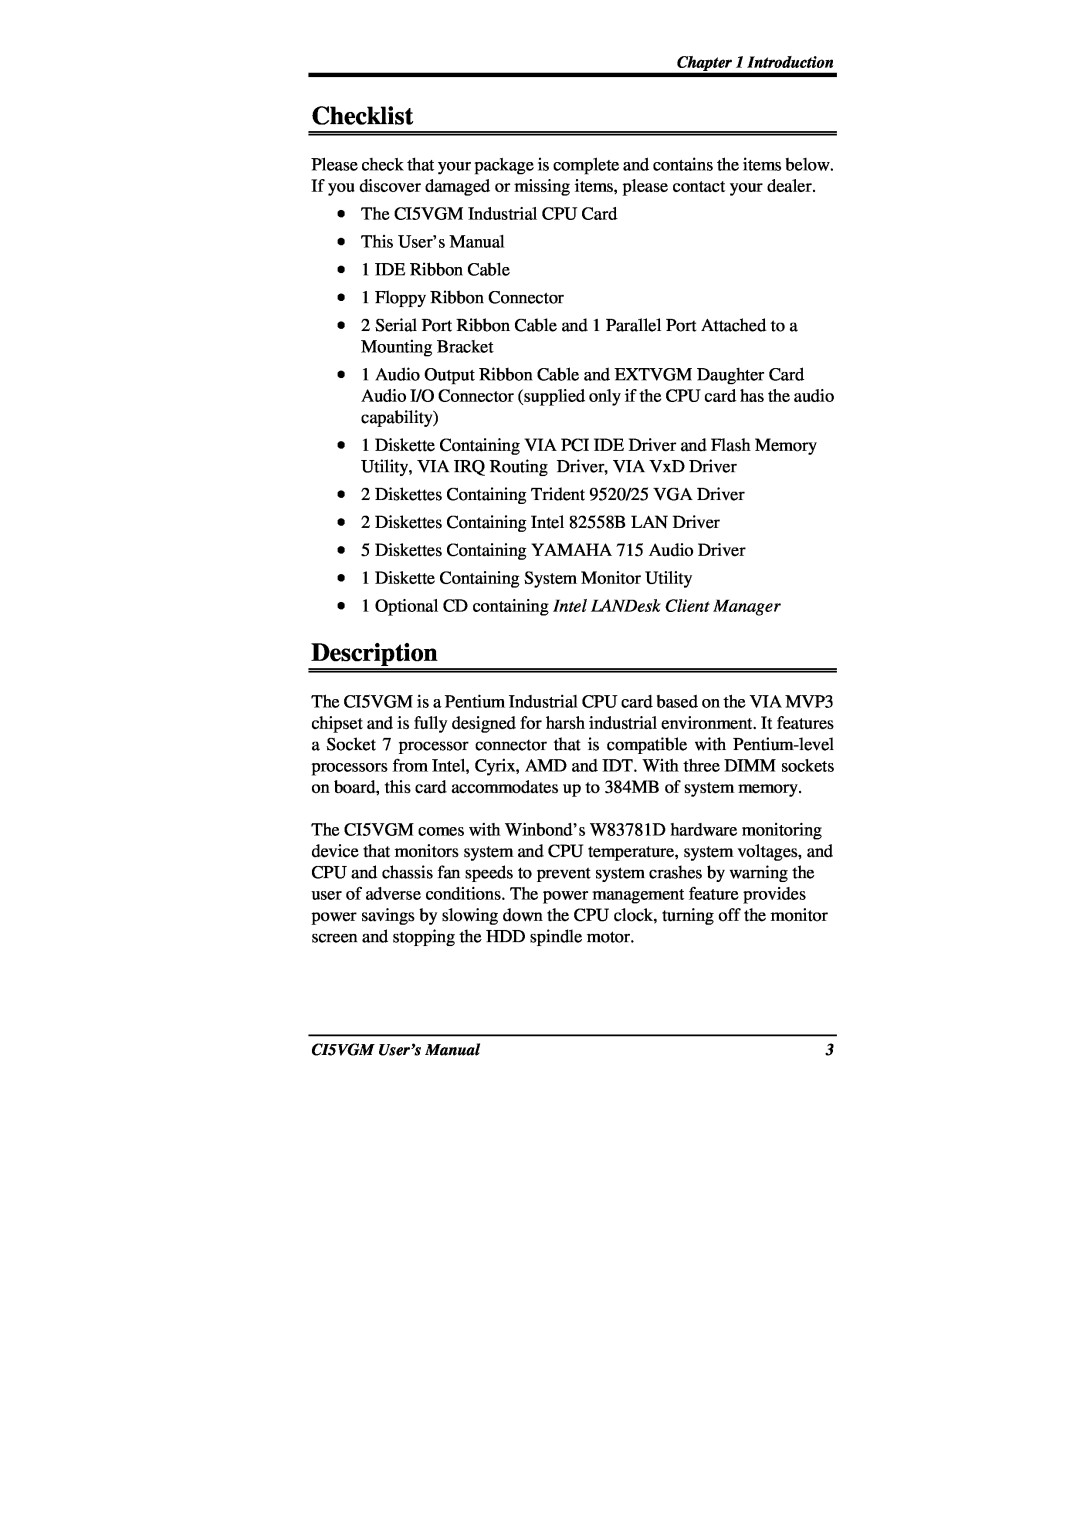 IBM CI5VGM Series user manual Checklist, Description, Optional CD containing Intel LANDesk Client Manager 